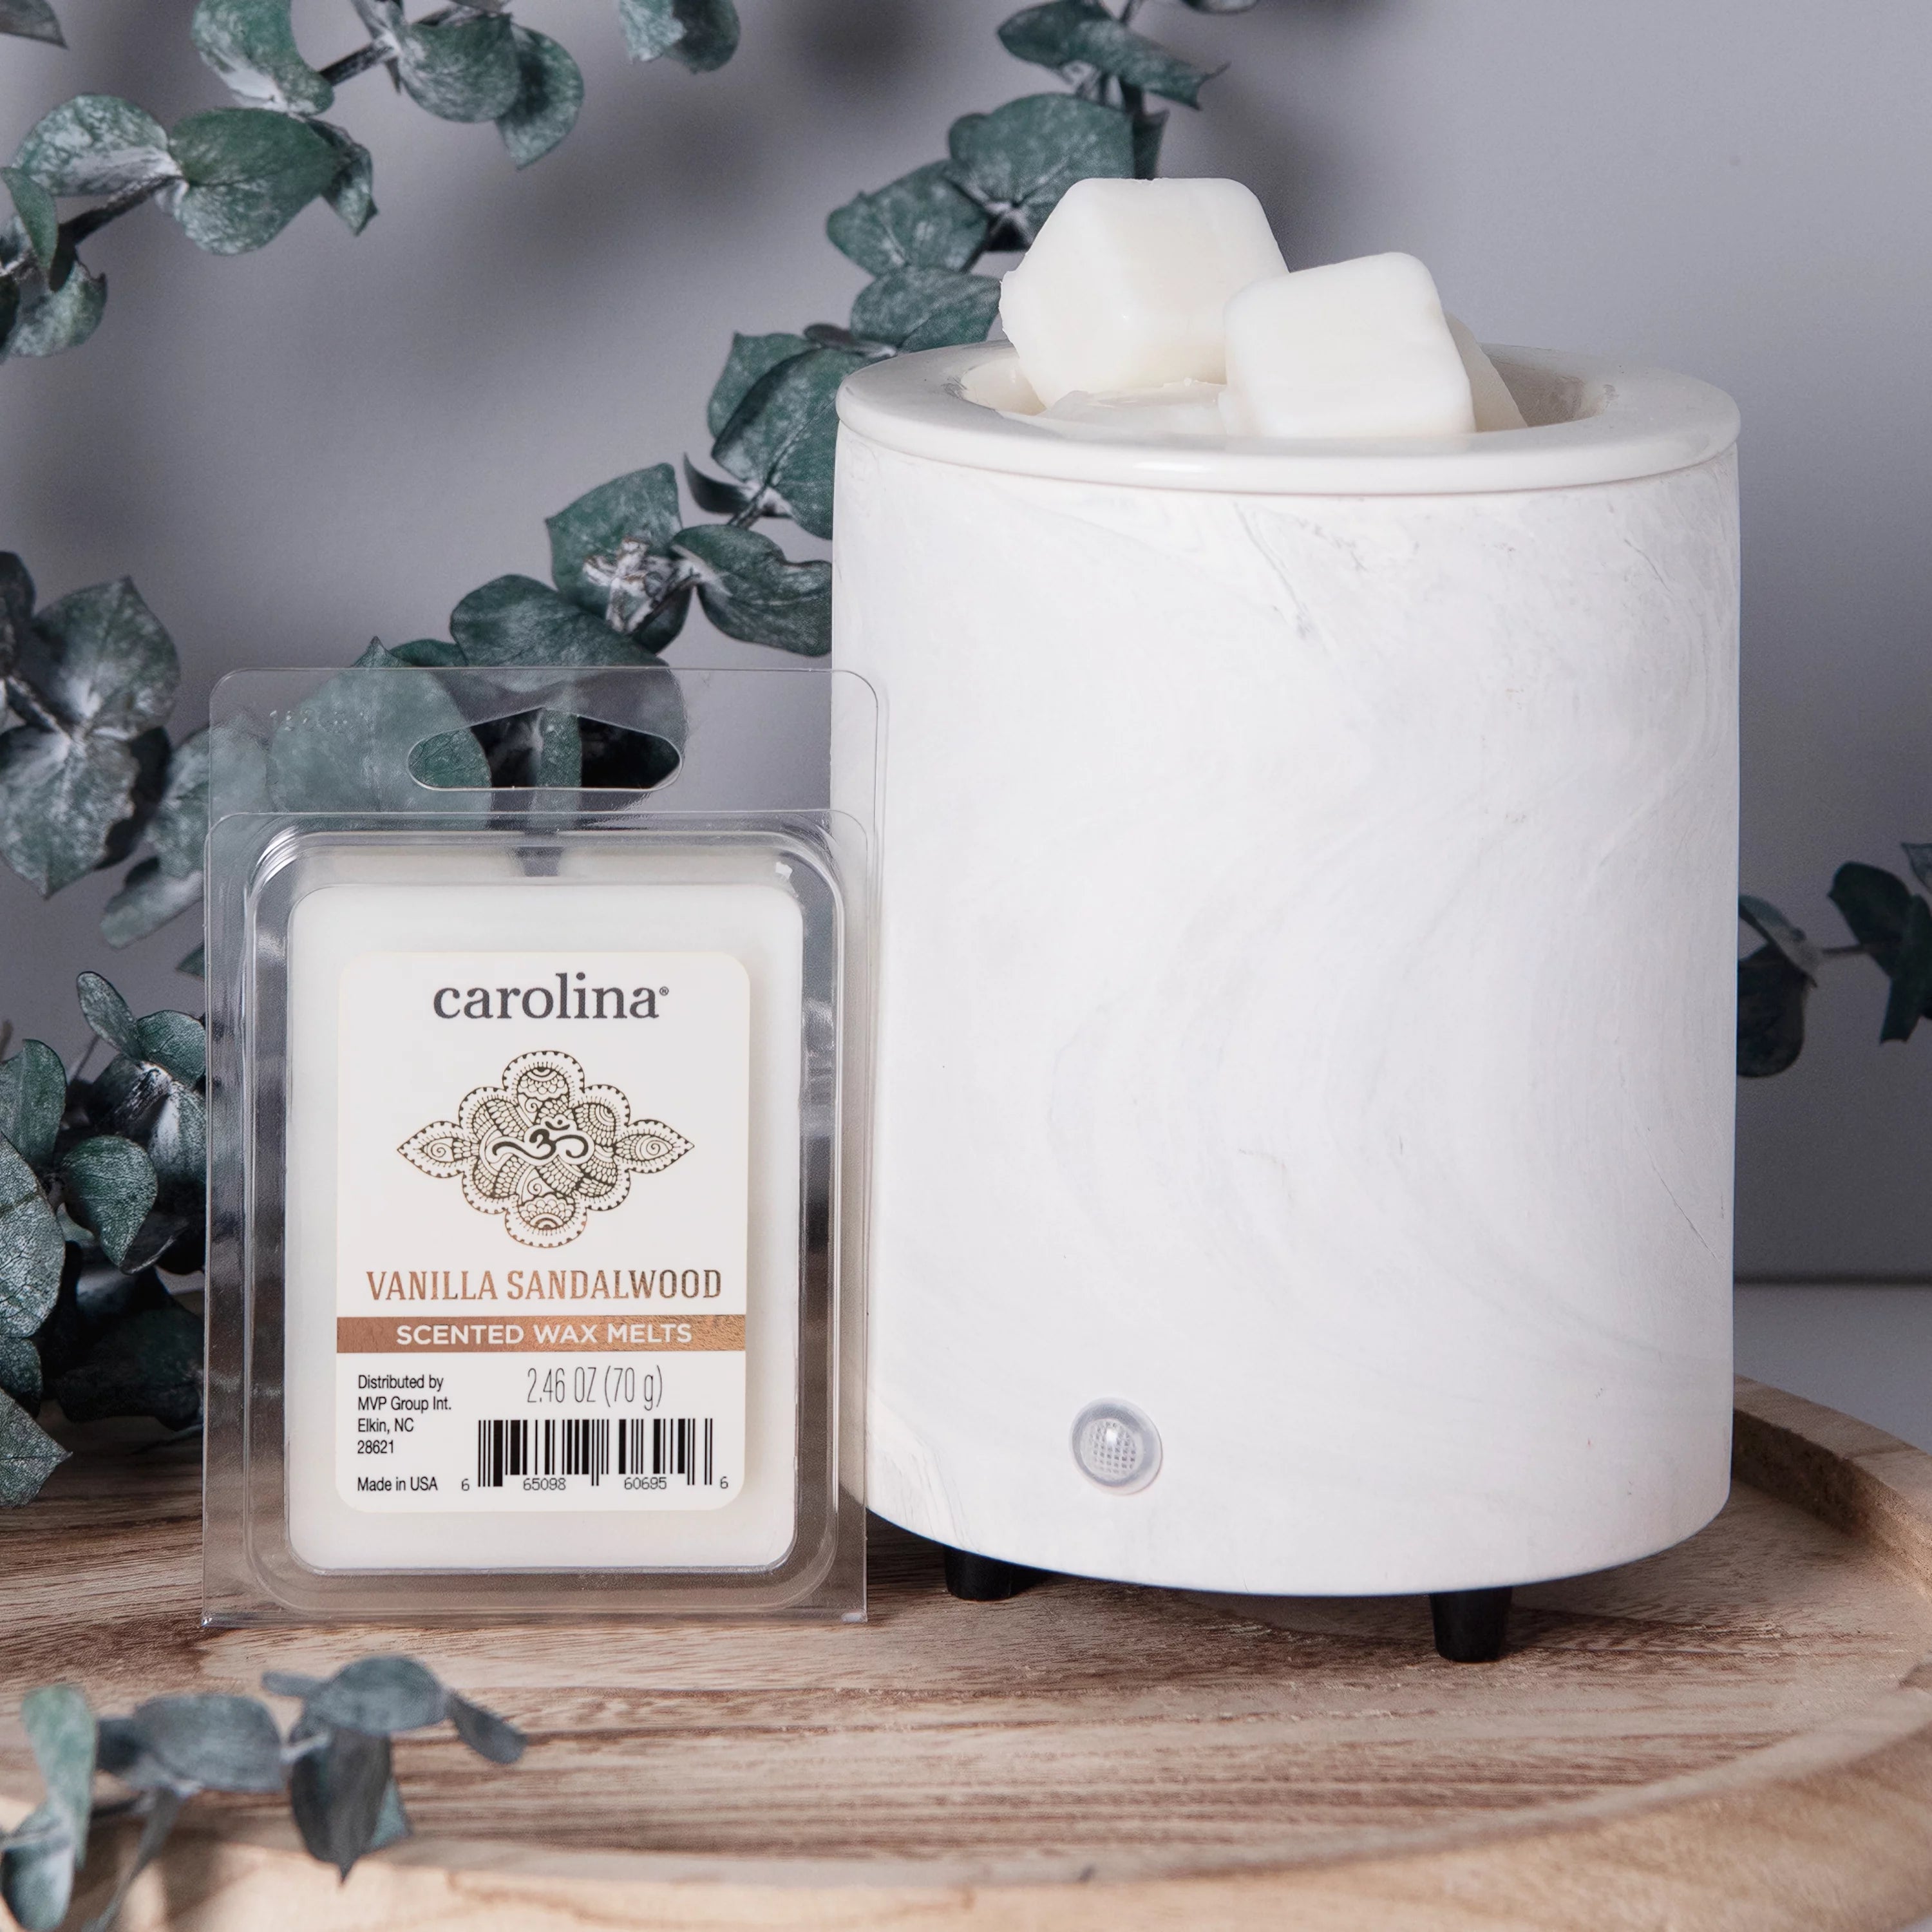 Vanilla Sandalwood Wax Melt, Carolina Wellness Collection, 6 cubes